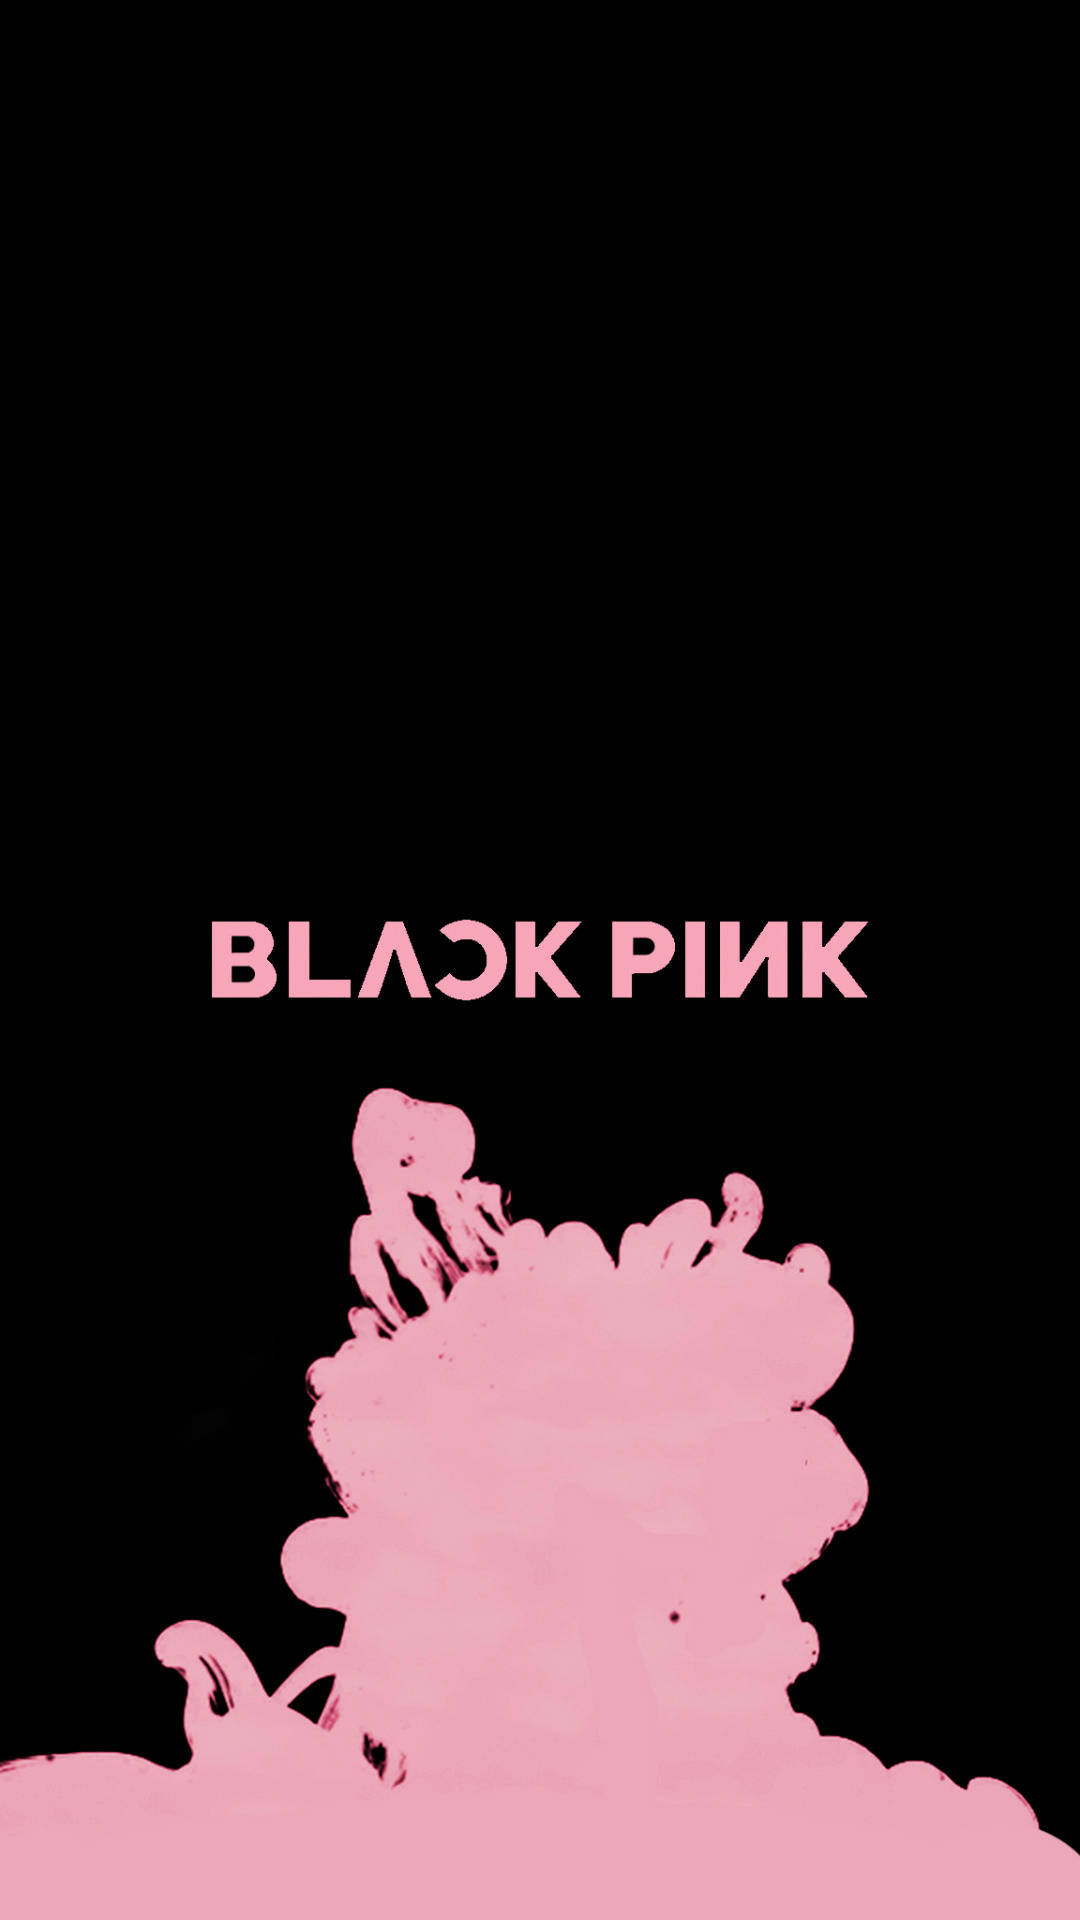 Blackpink Logo With Pink Smoke